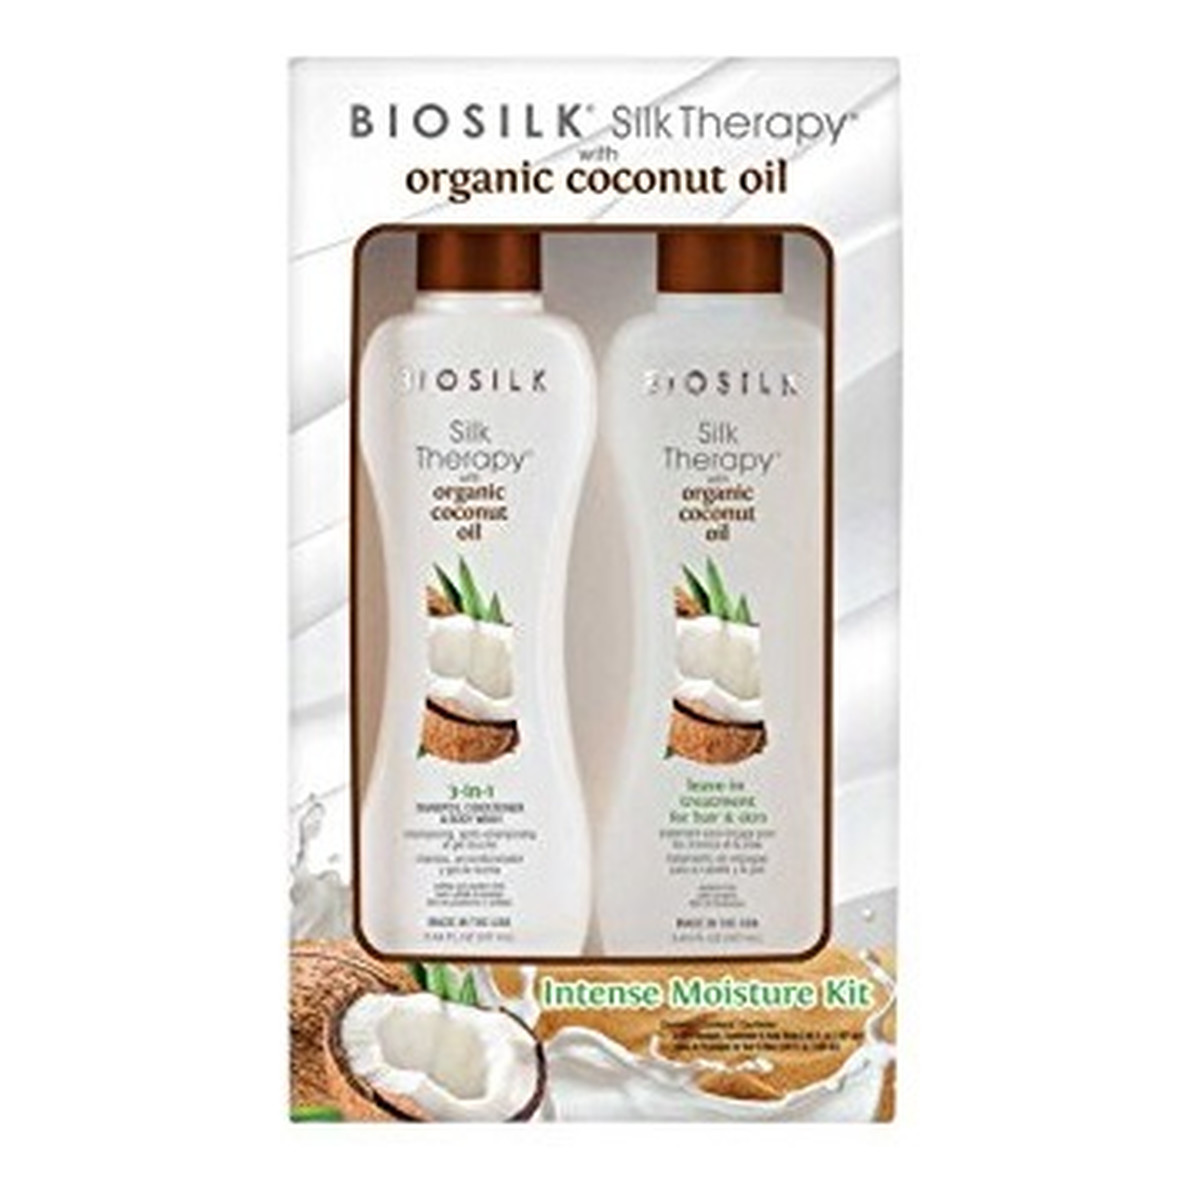 Biosilk Silk Therapy zestaw Organic Coconut Oil 3in1 167ml